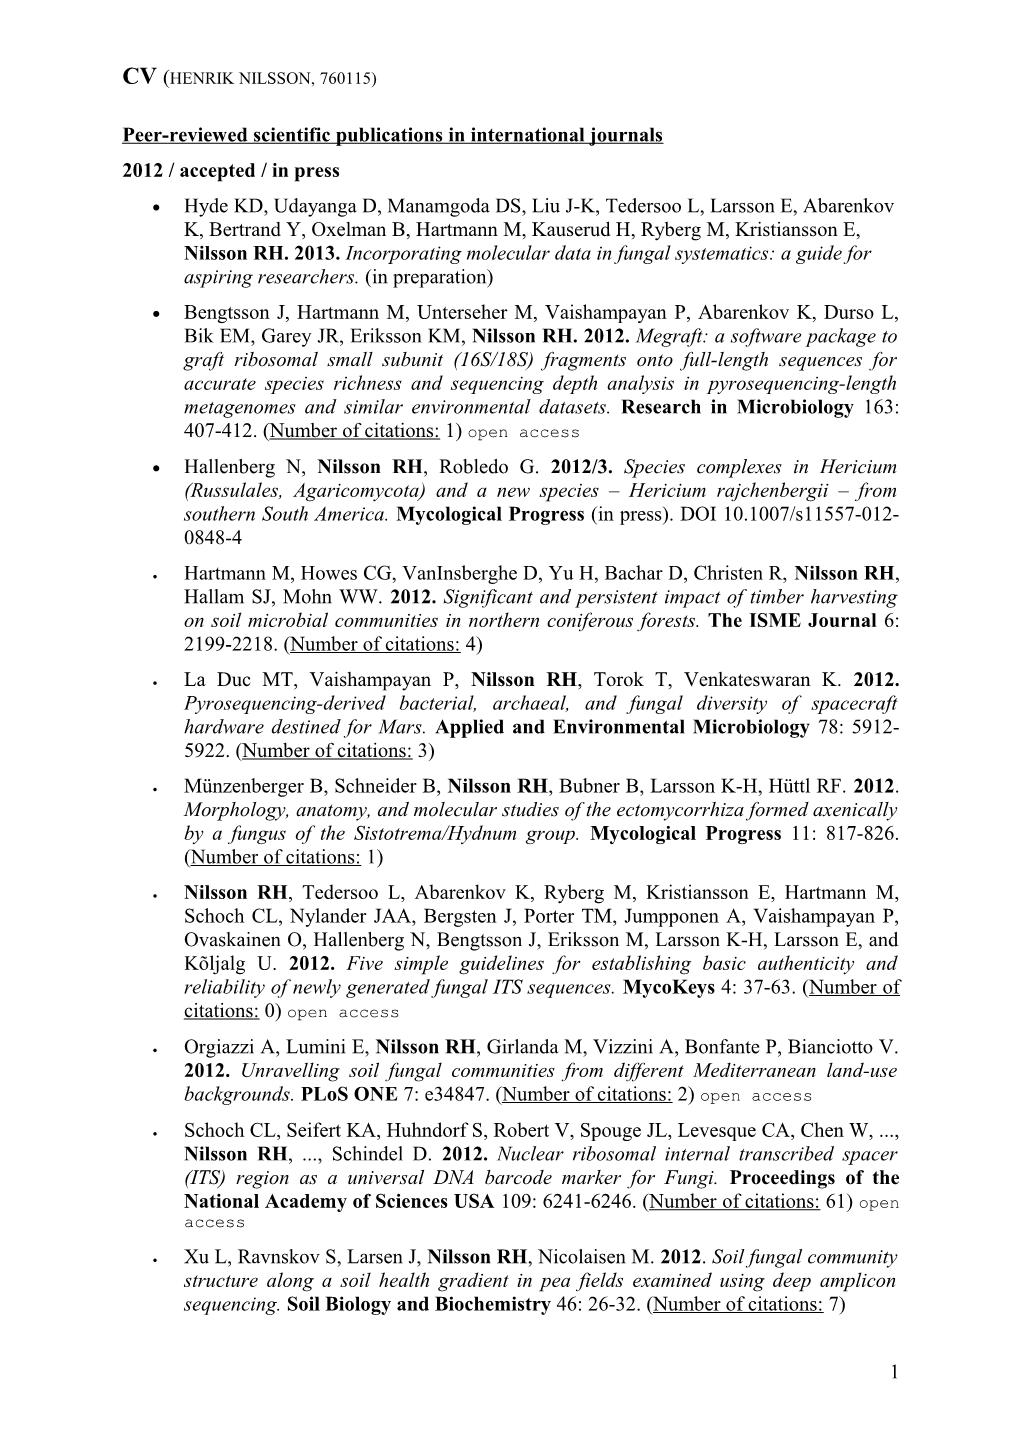 Peer-Reviewed Scientific Publications in International Journals